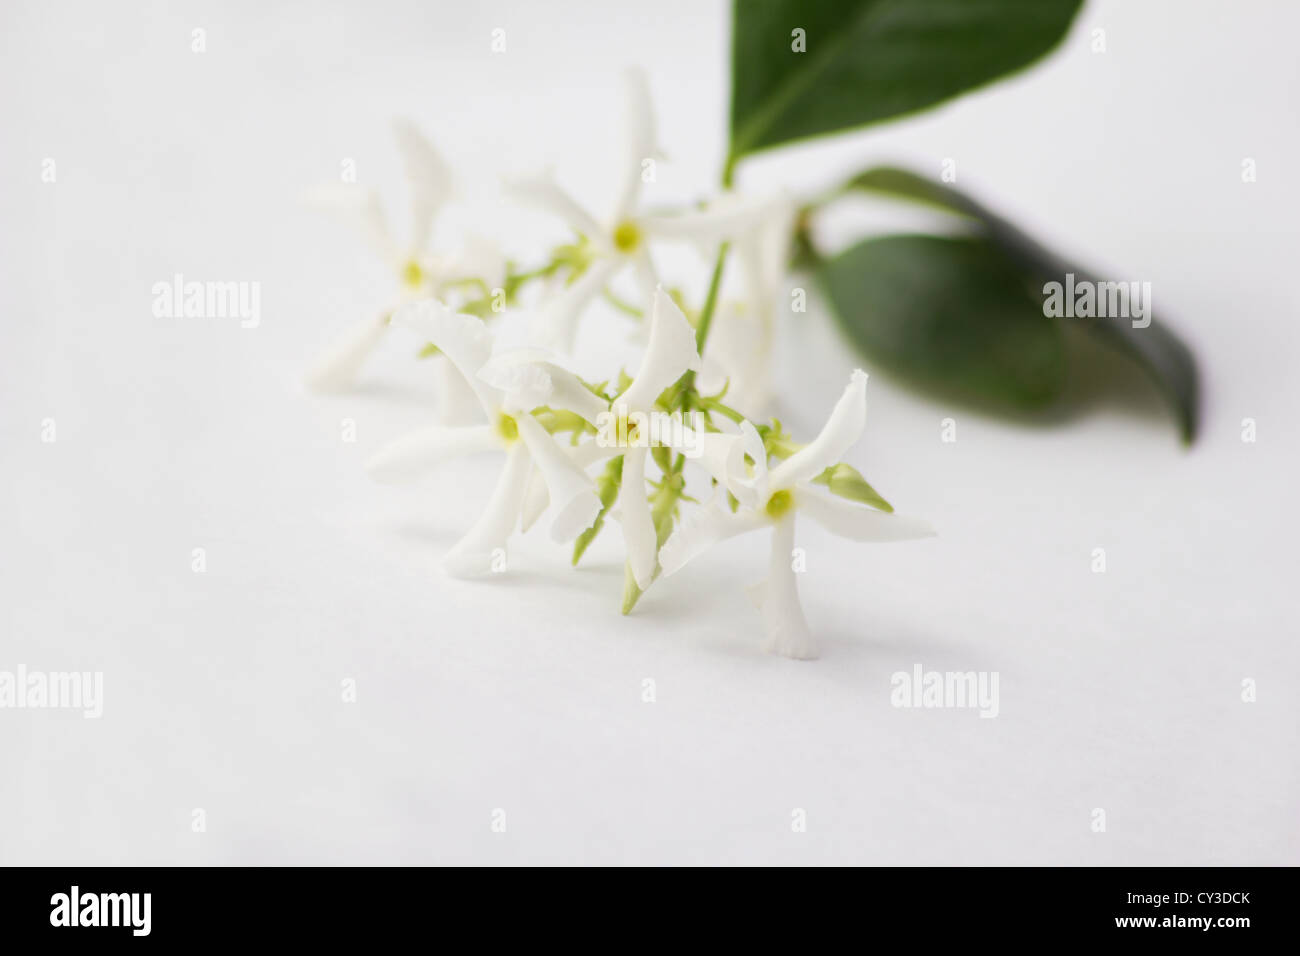 Star Jasmine (Trachelospermum jasminoides) blossoms on white background Stock Photo